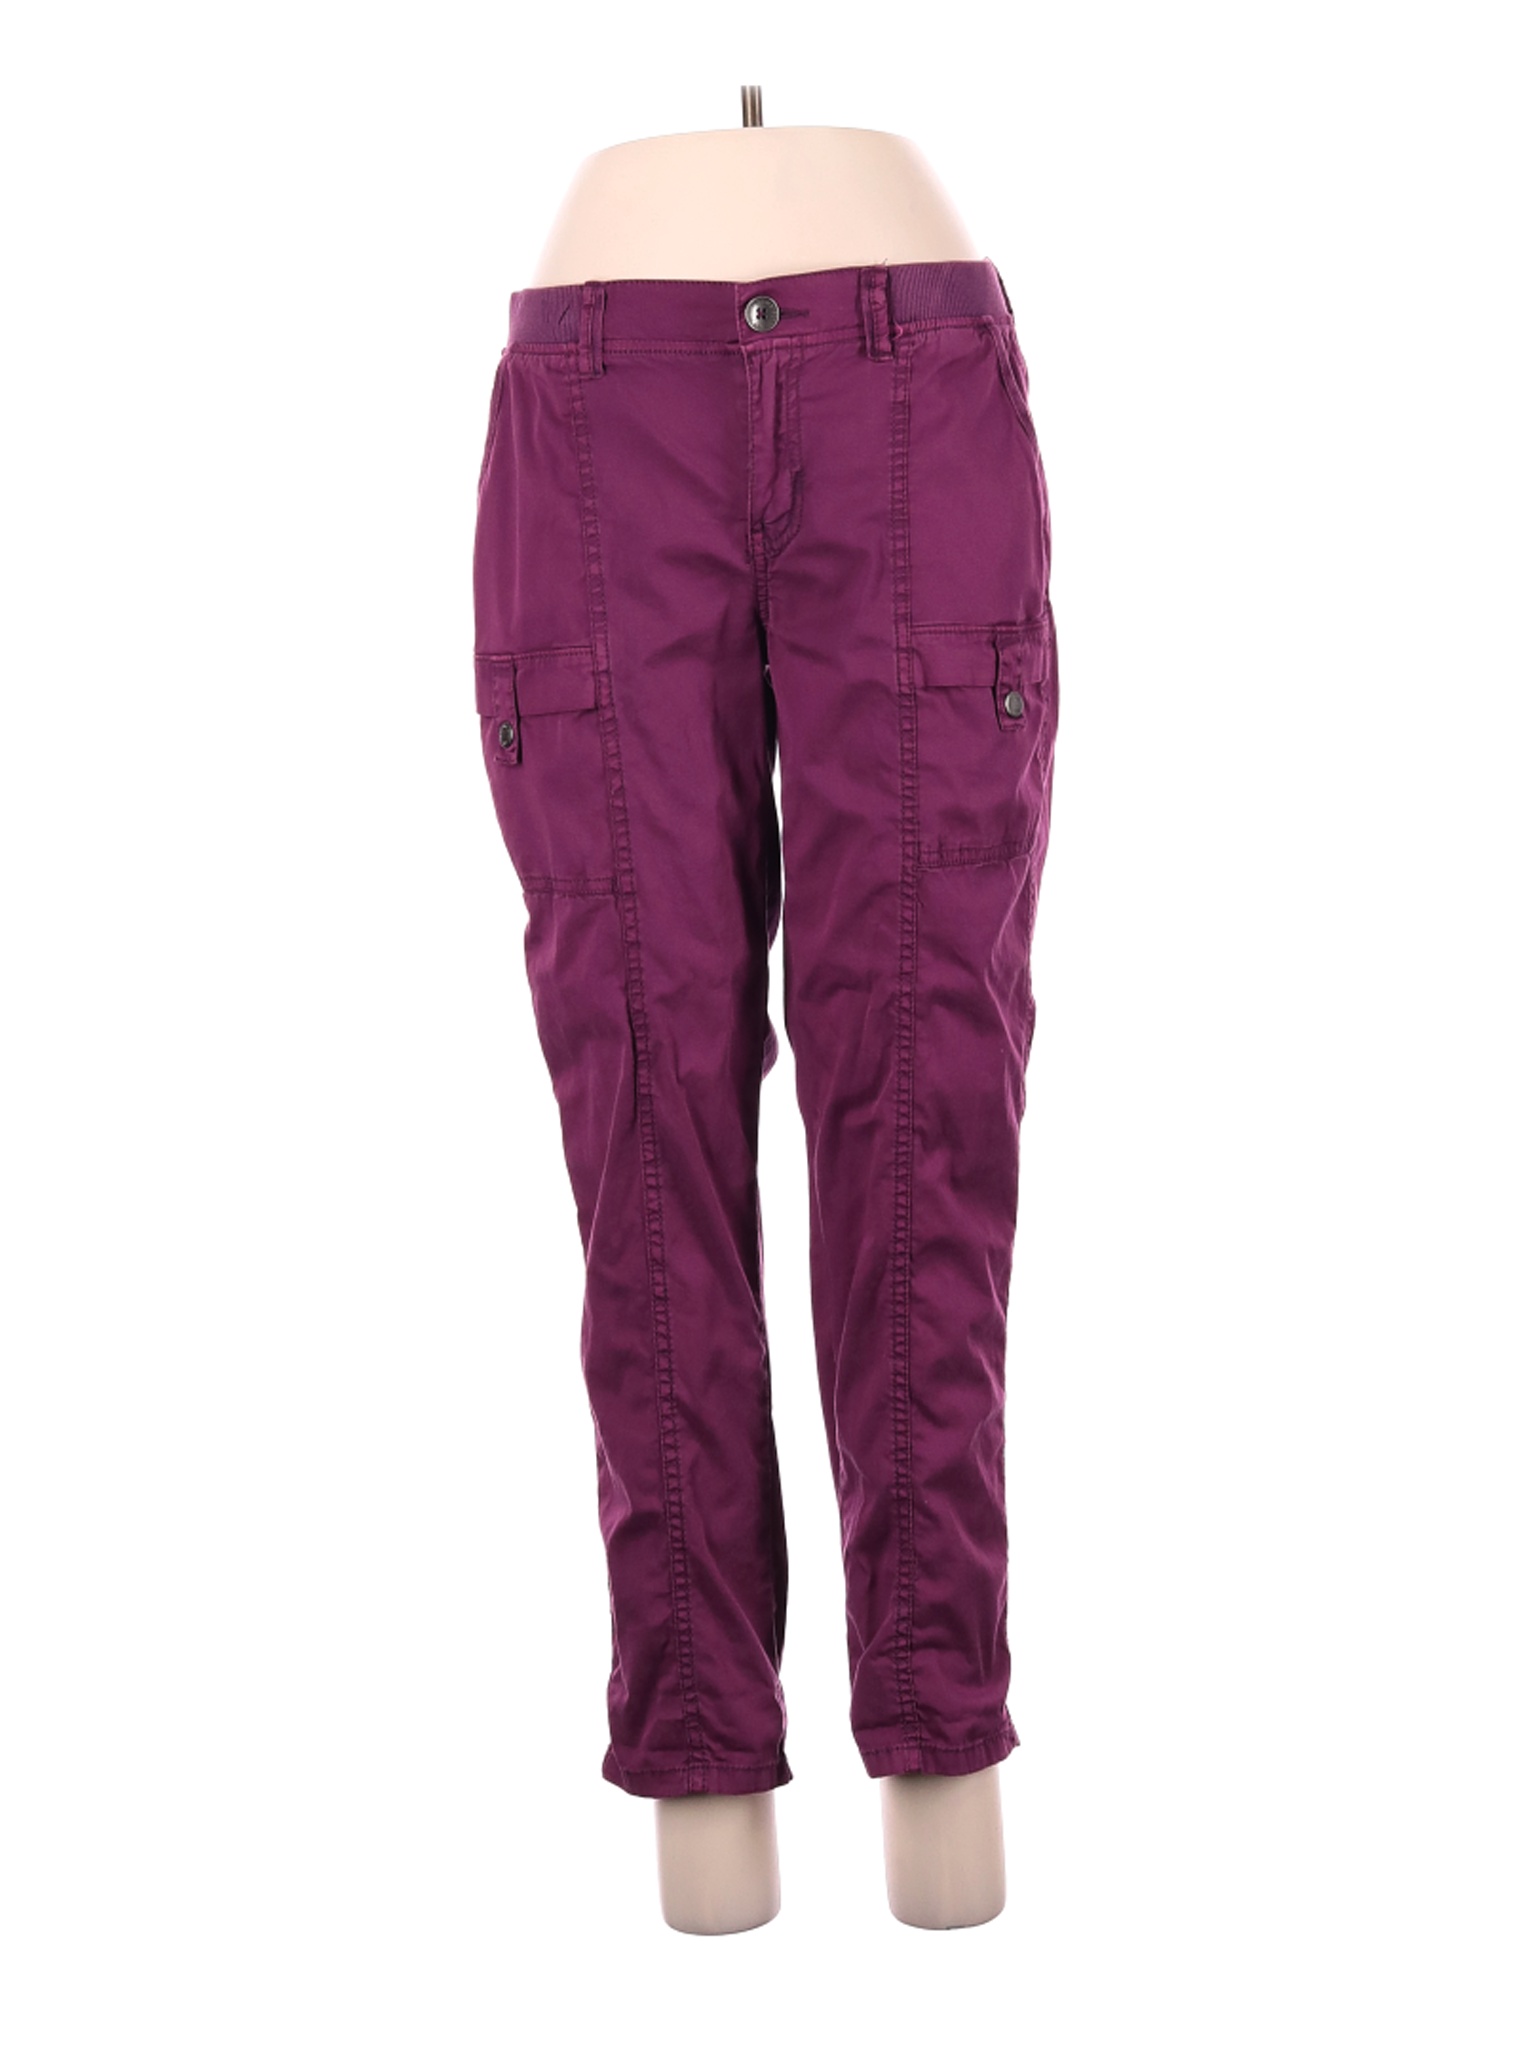 Sonoma Goods for Life Women Purple Cargo Pants 8 | eBay